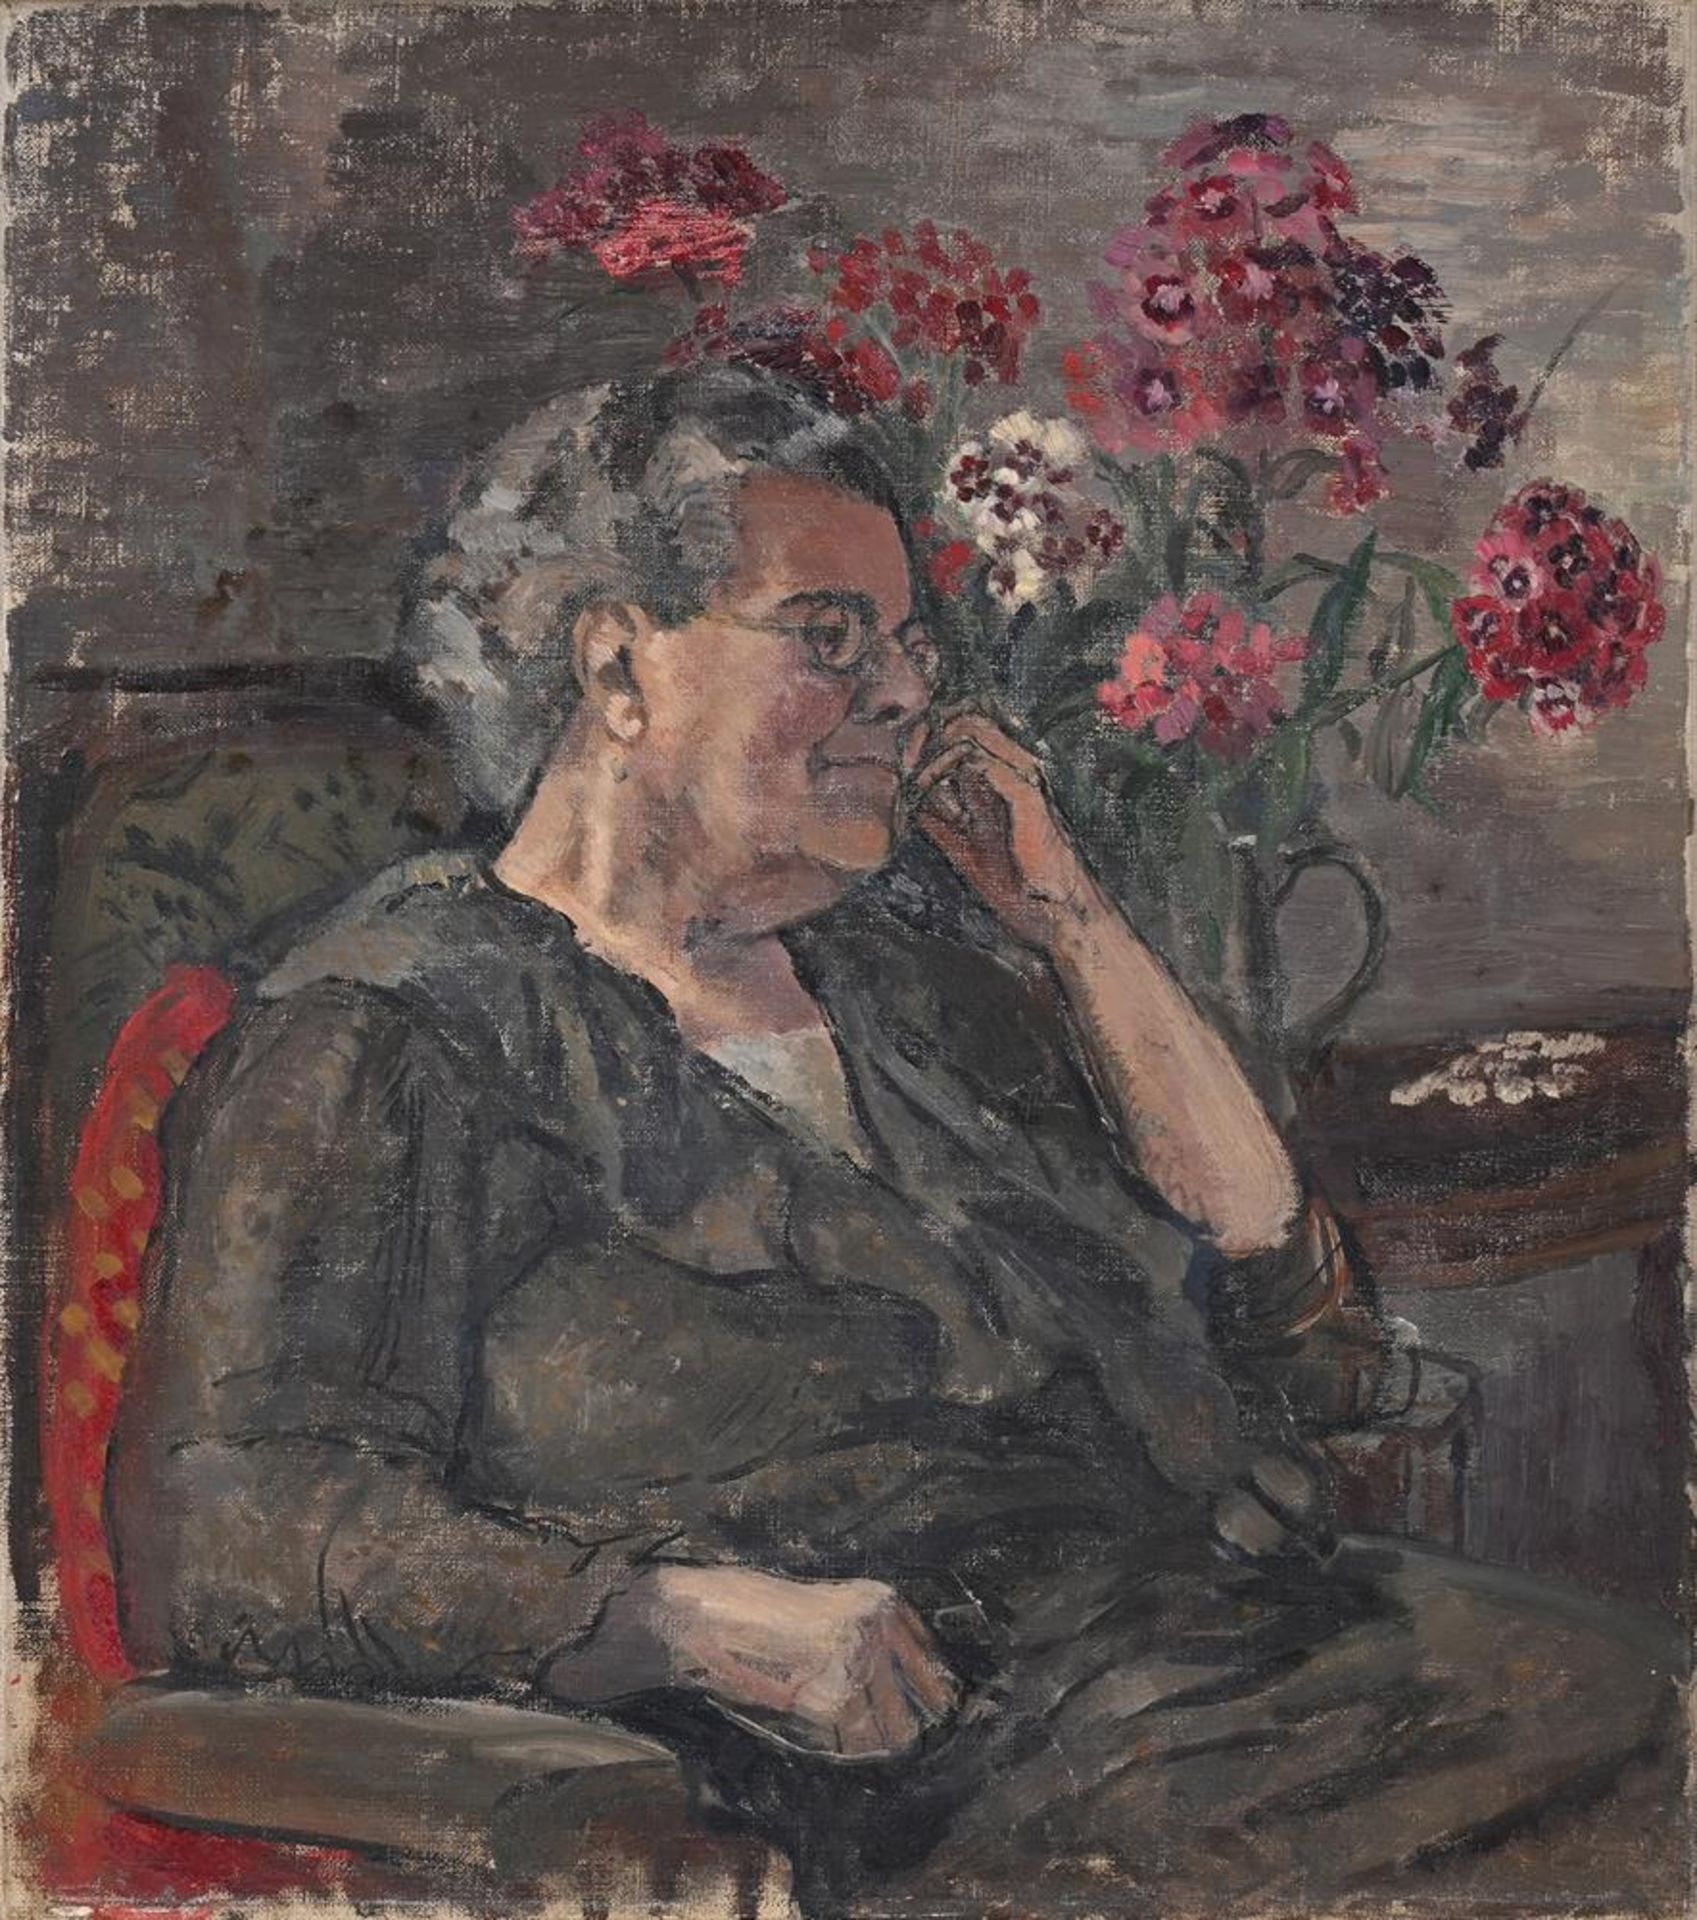 MARION RICHARDSON (BRITISH 1892-1946), MARION RICHARDSON'S MOTHER, ELLEN RICHARDSON, (NÉE DYER)